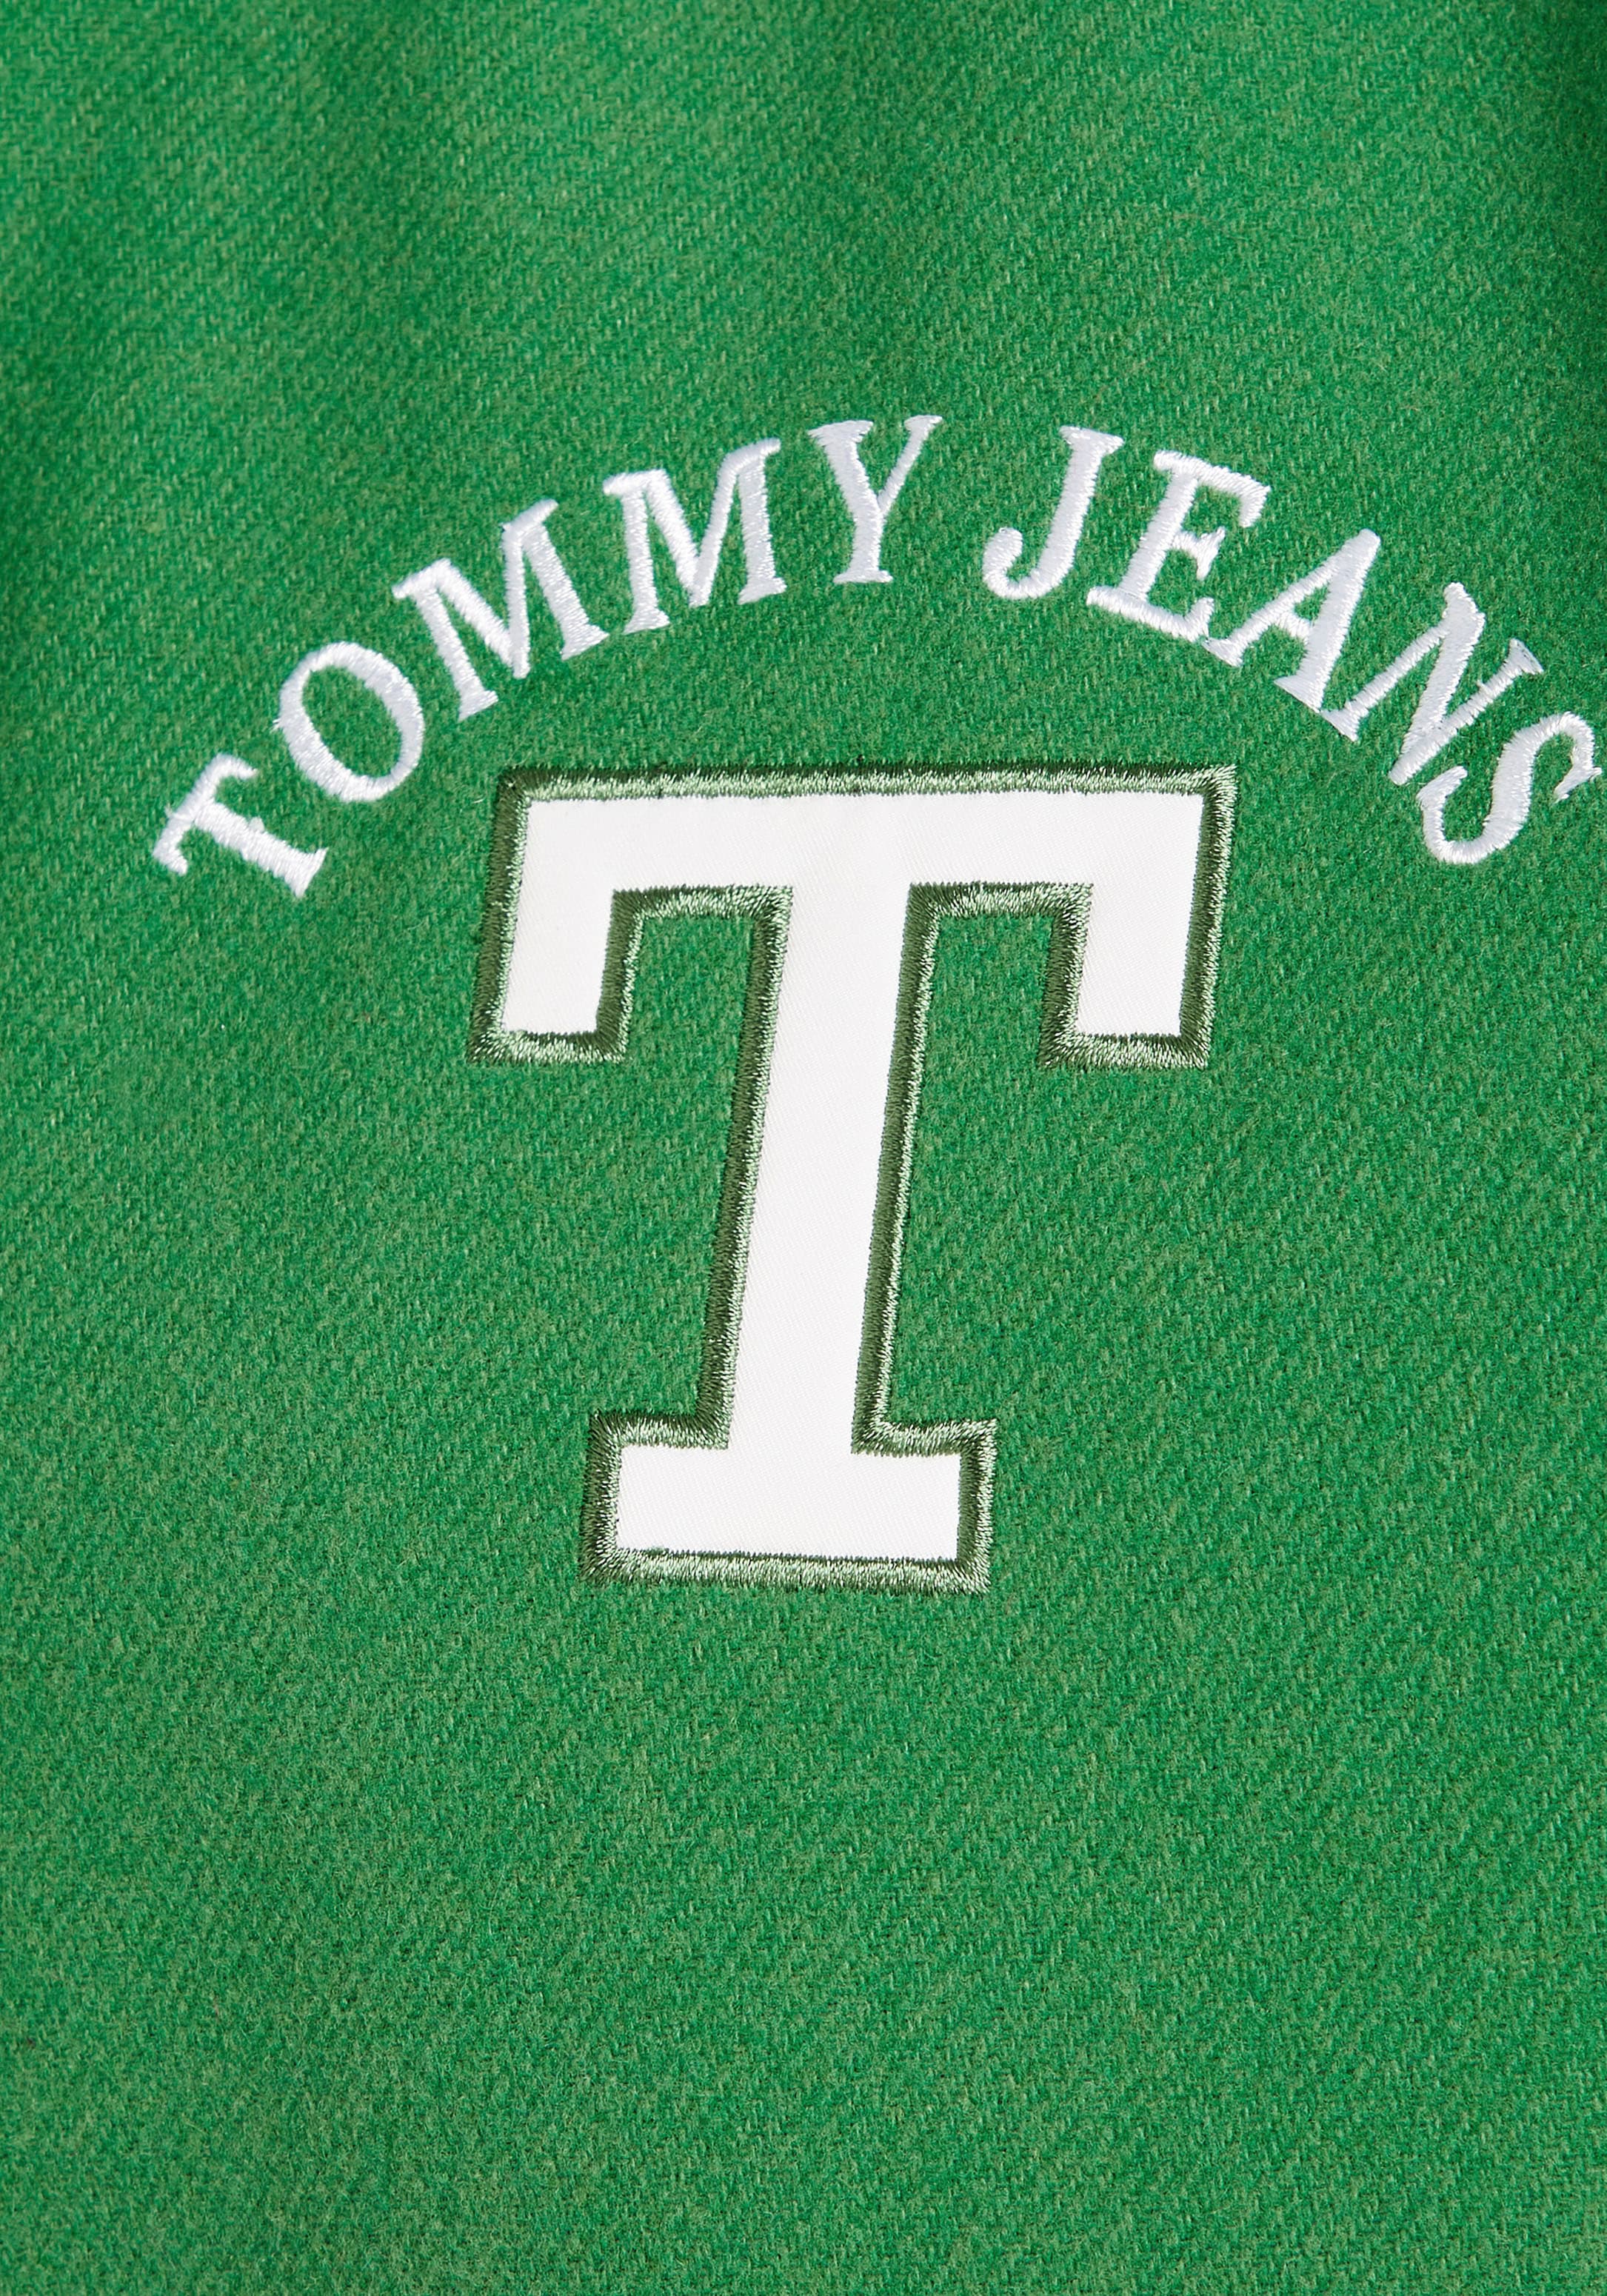 Tommy Jeans Steppweste »TJW ZIP OFF SLEEVE LETTERMAN«, Mit Jackenaufhänger am Krageninneren